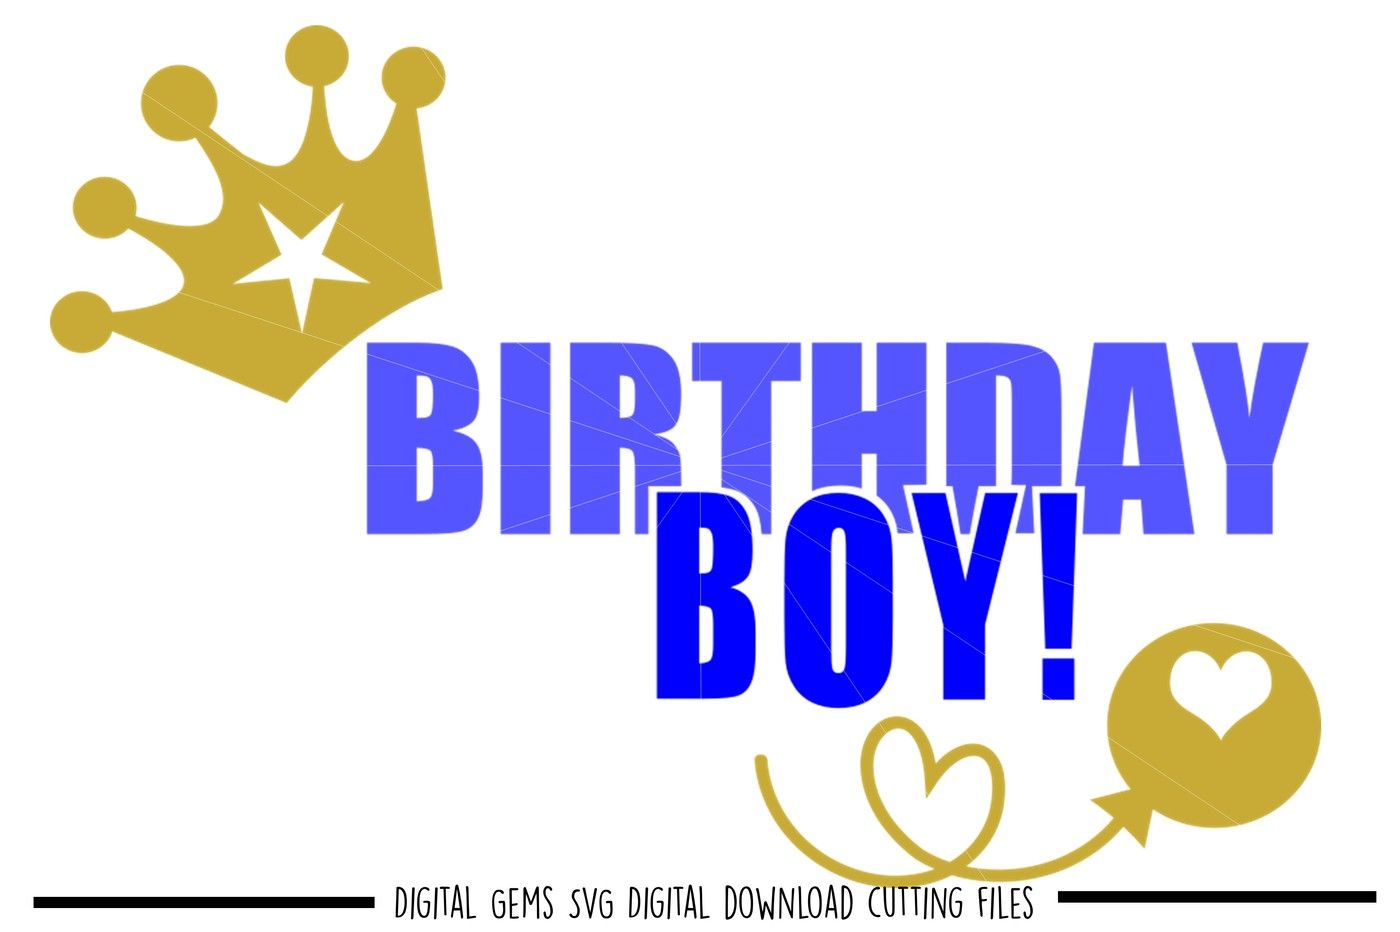 Download Birthday Boy SVG / DXF / EPS / PNG Files By Digital Gems | TheHungryJPEG.com